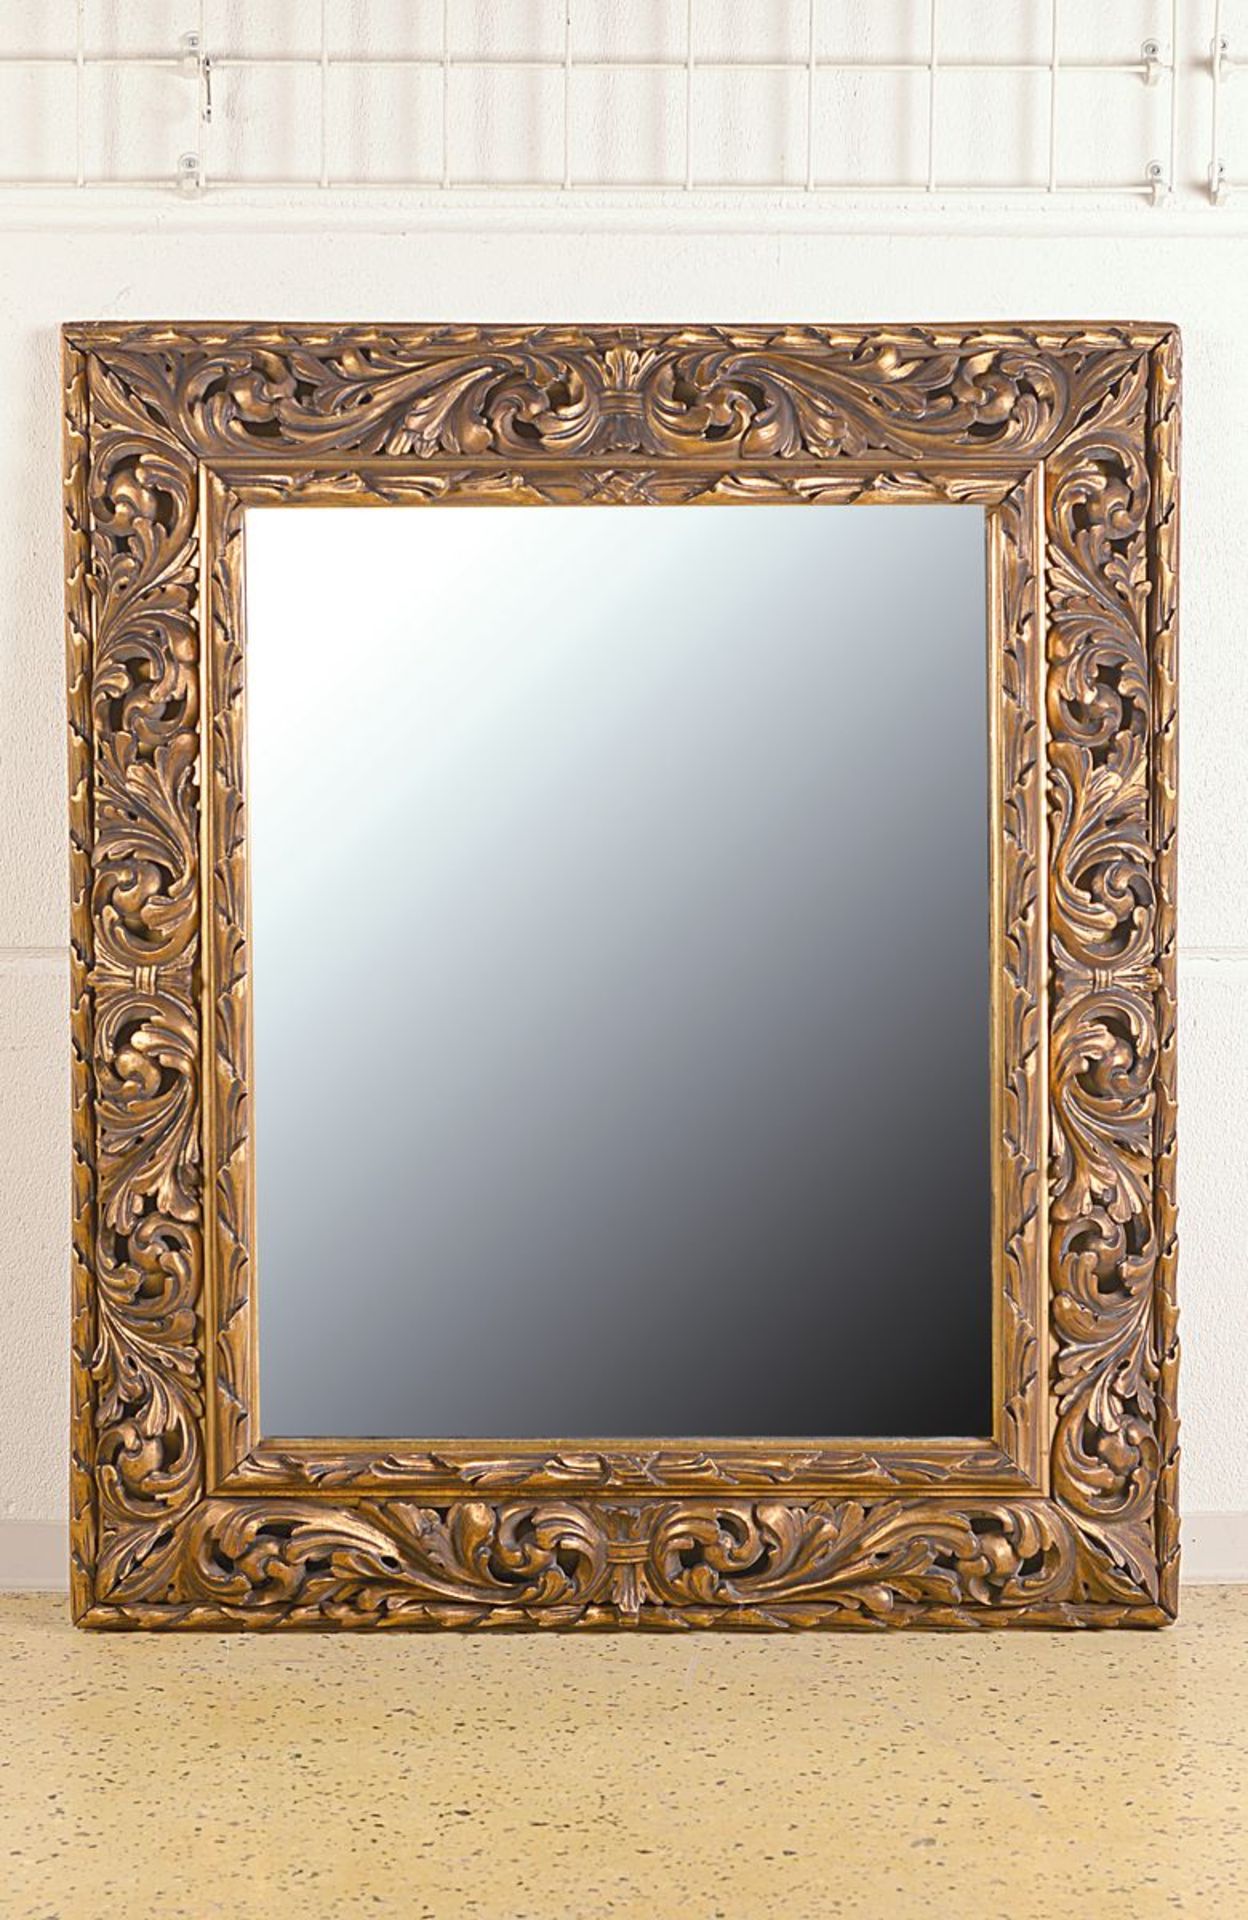 mirror, antique wooden frame around 1890, rococo decor, mirror glass secondary, bronze coloured